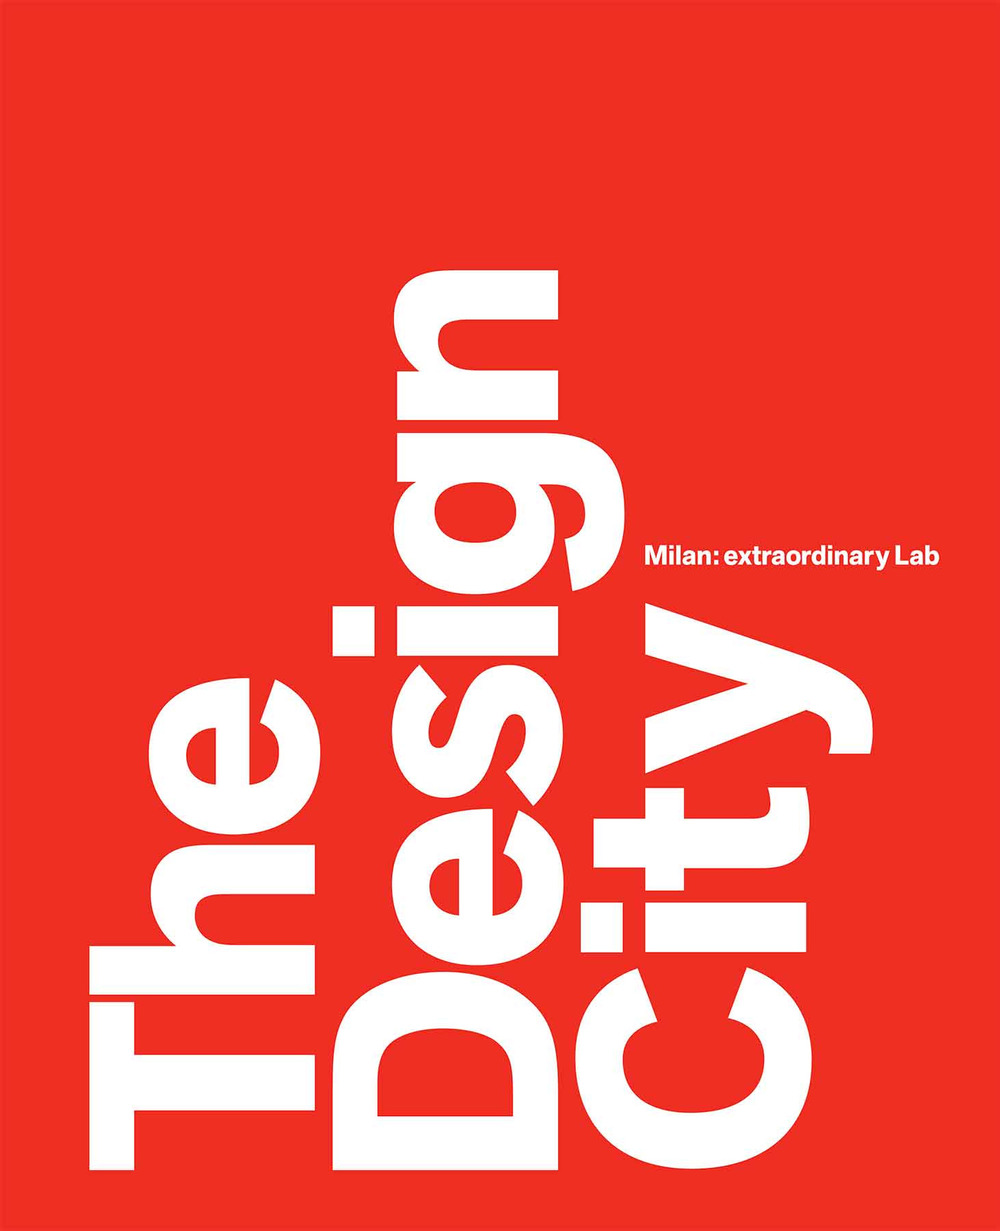 The design city. Milan: extraordinary Lab